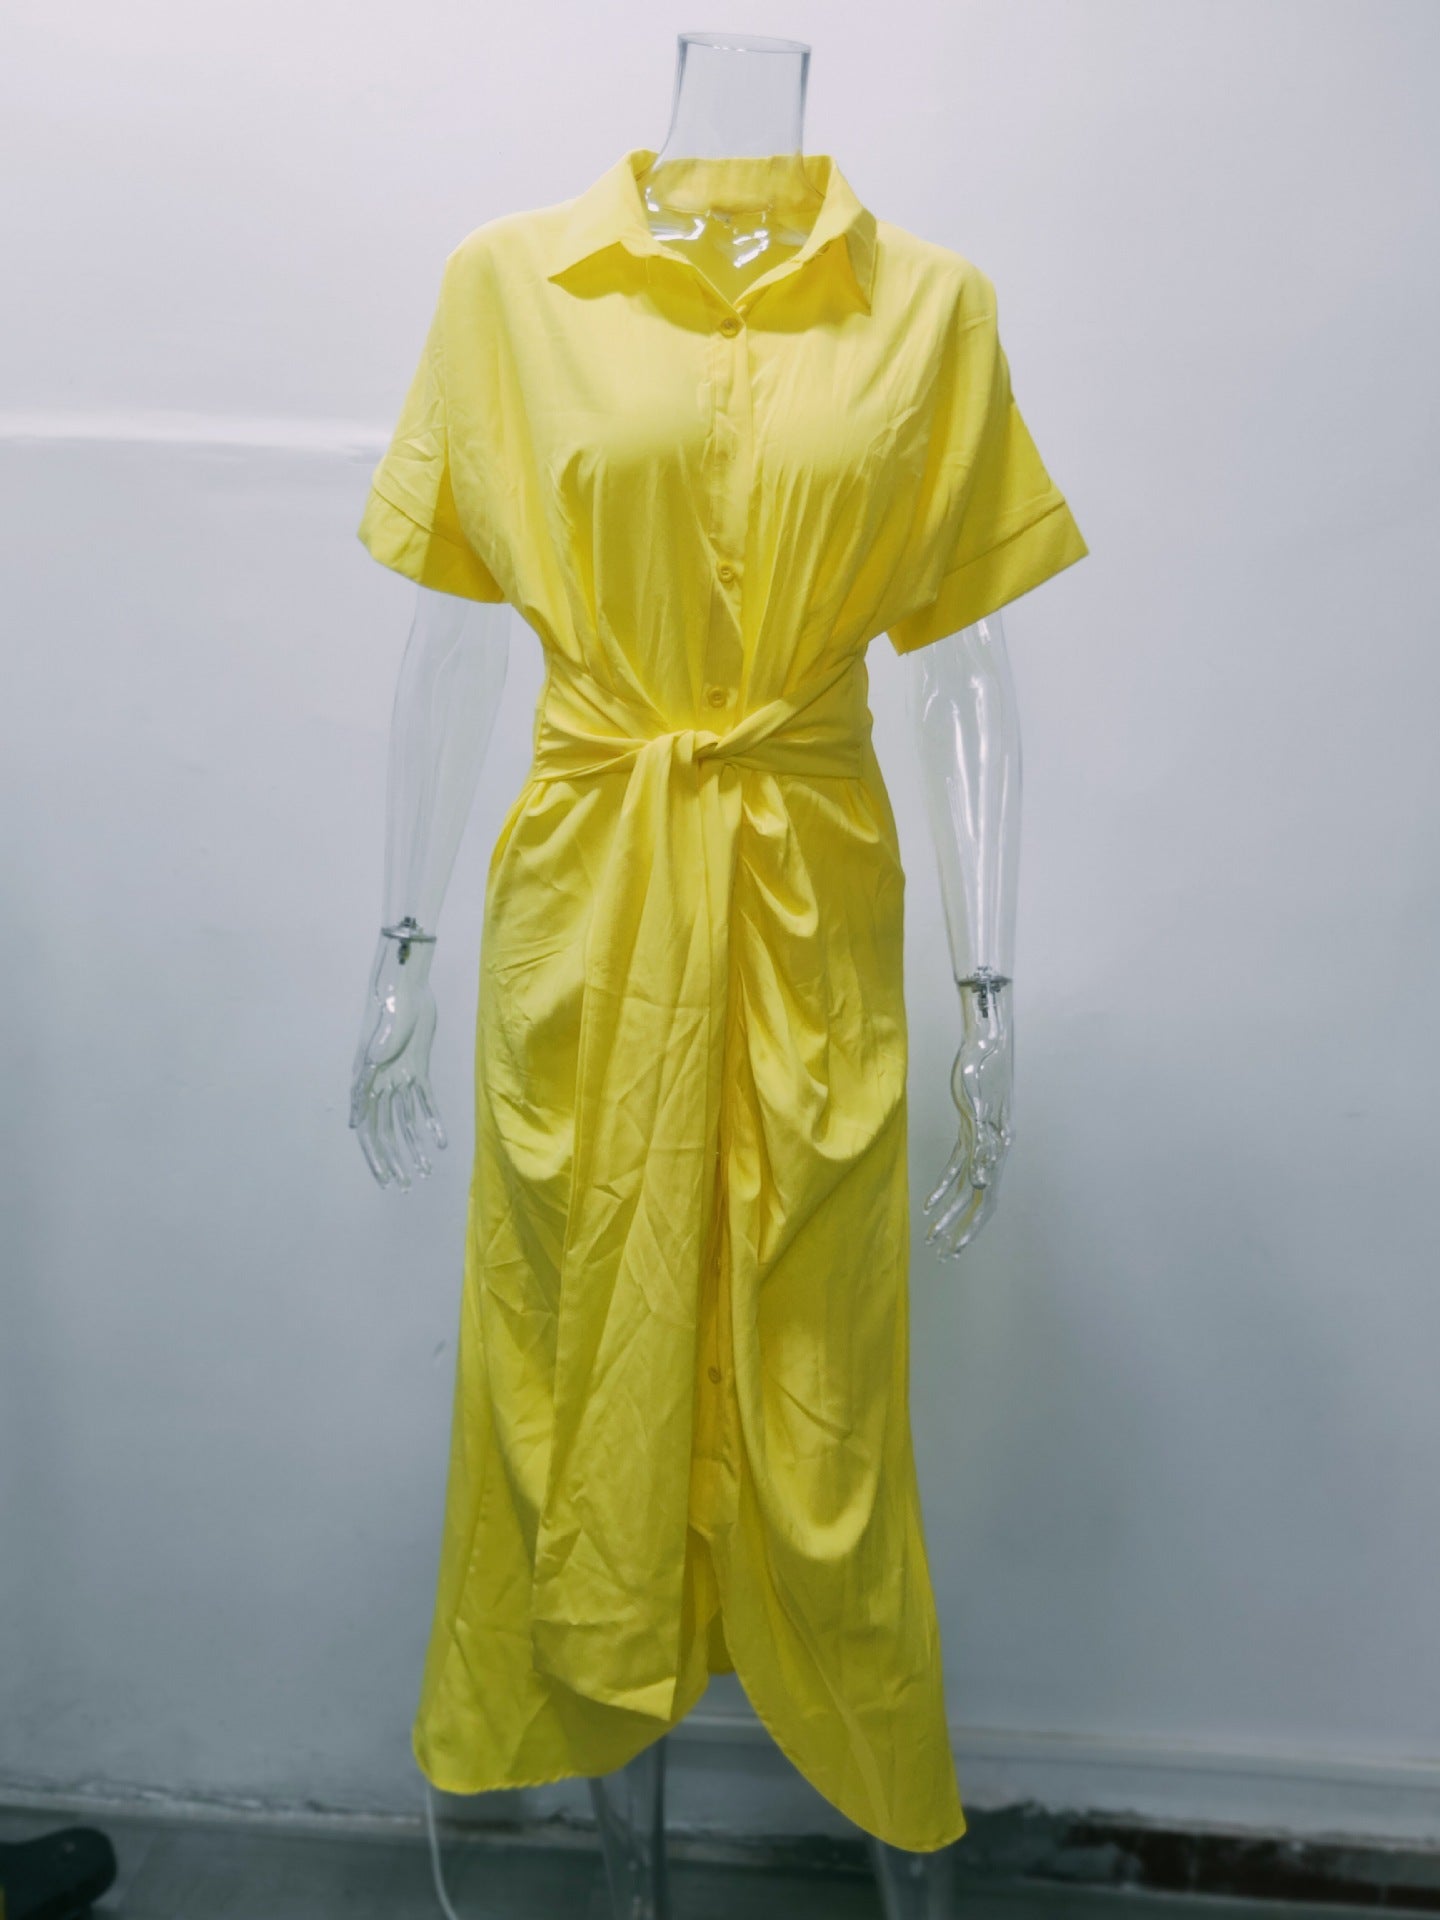 Summer Women Midi Length Shirts Dresses-Dresses-White-S-Free Shipping Leatheretro